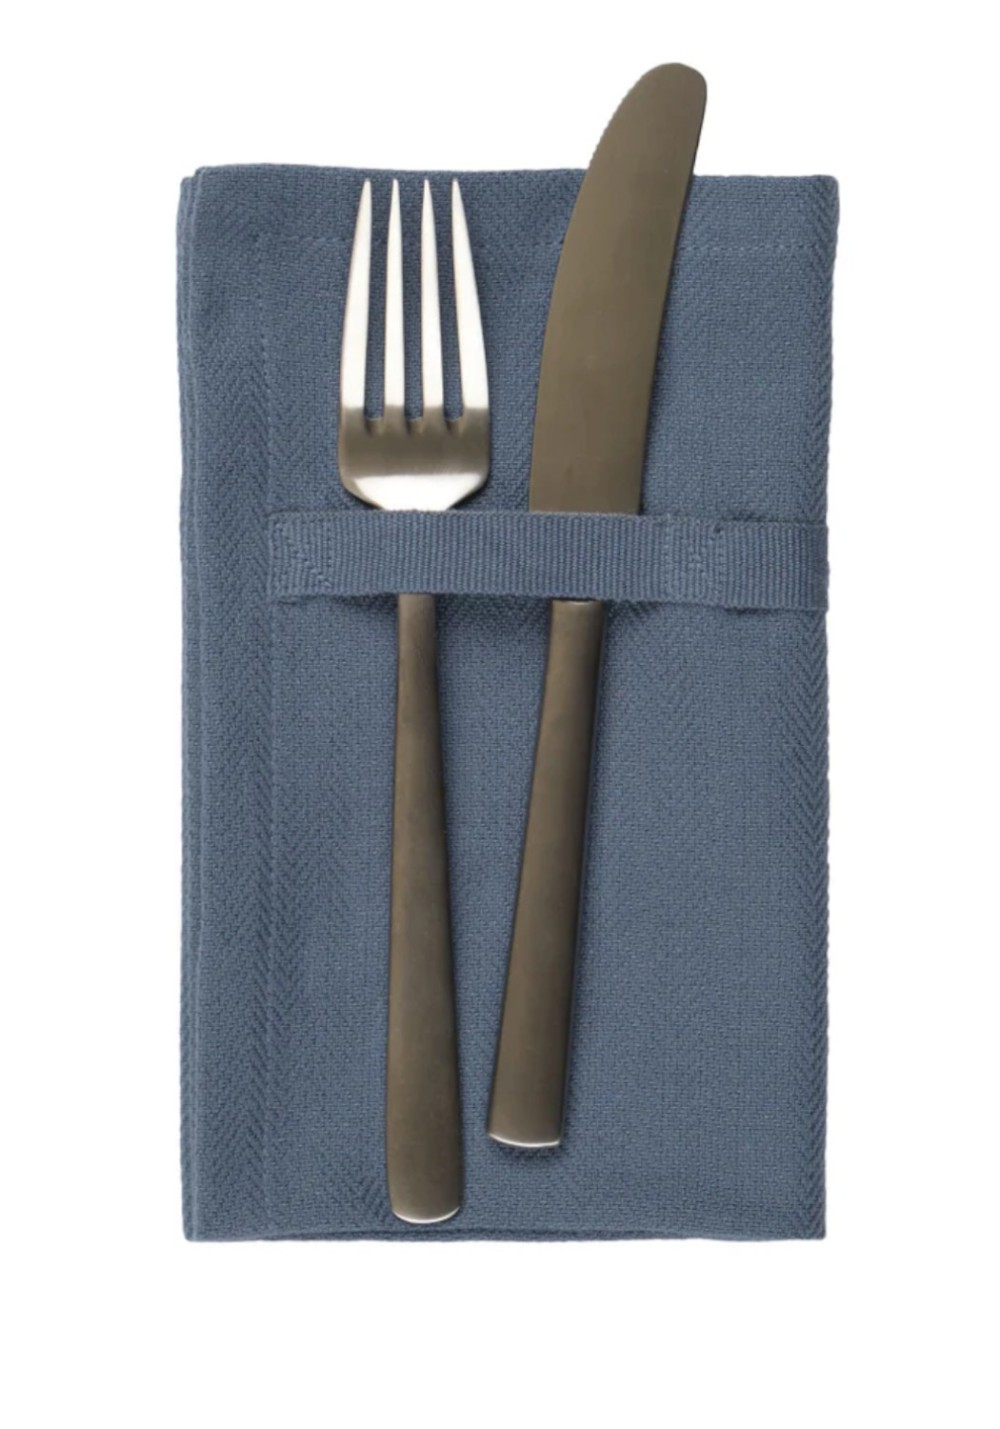 The Organic Company - Stoffservietten 4er-Pack Dinner Napkin Grey Blue